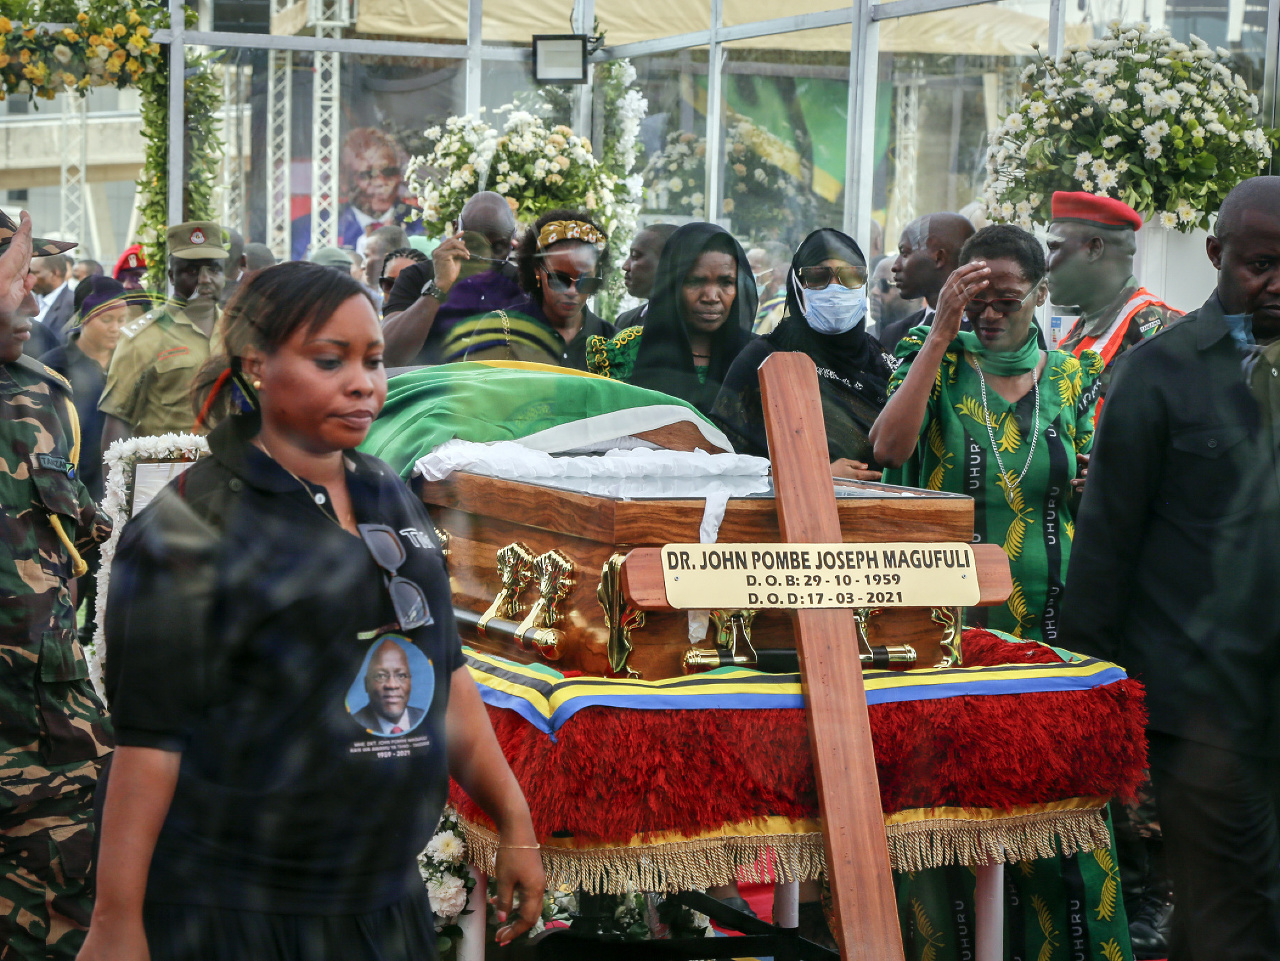 Prezident Magufuli zomrel 17. marca na zlyhanie srdca vo veku 61 rokov